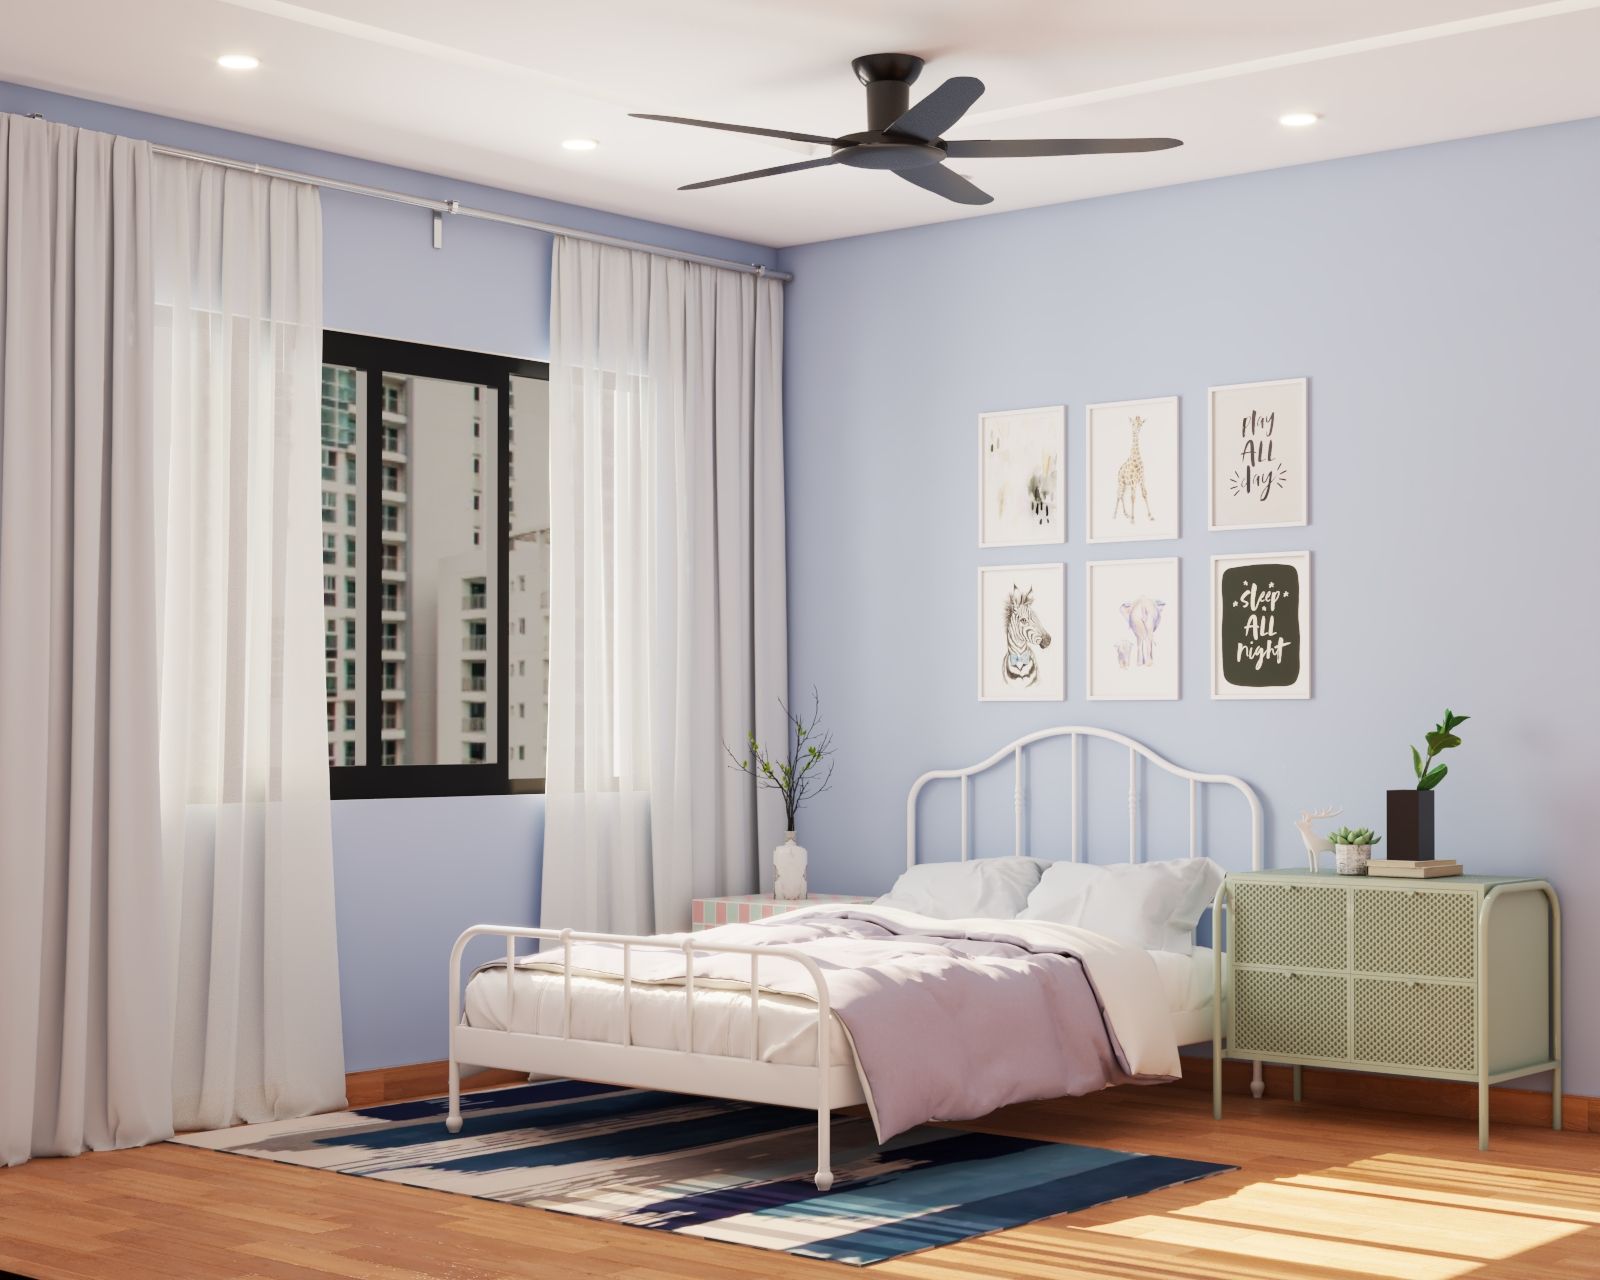 Single-Layered Bedroom False Ceiling Design With Spotlights